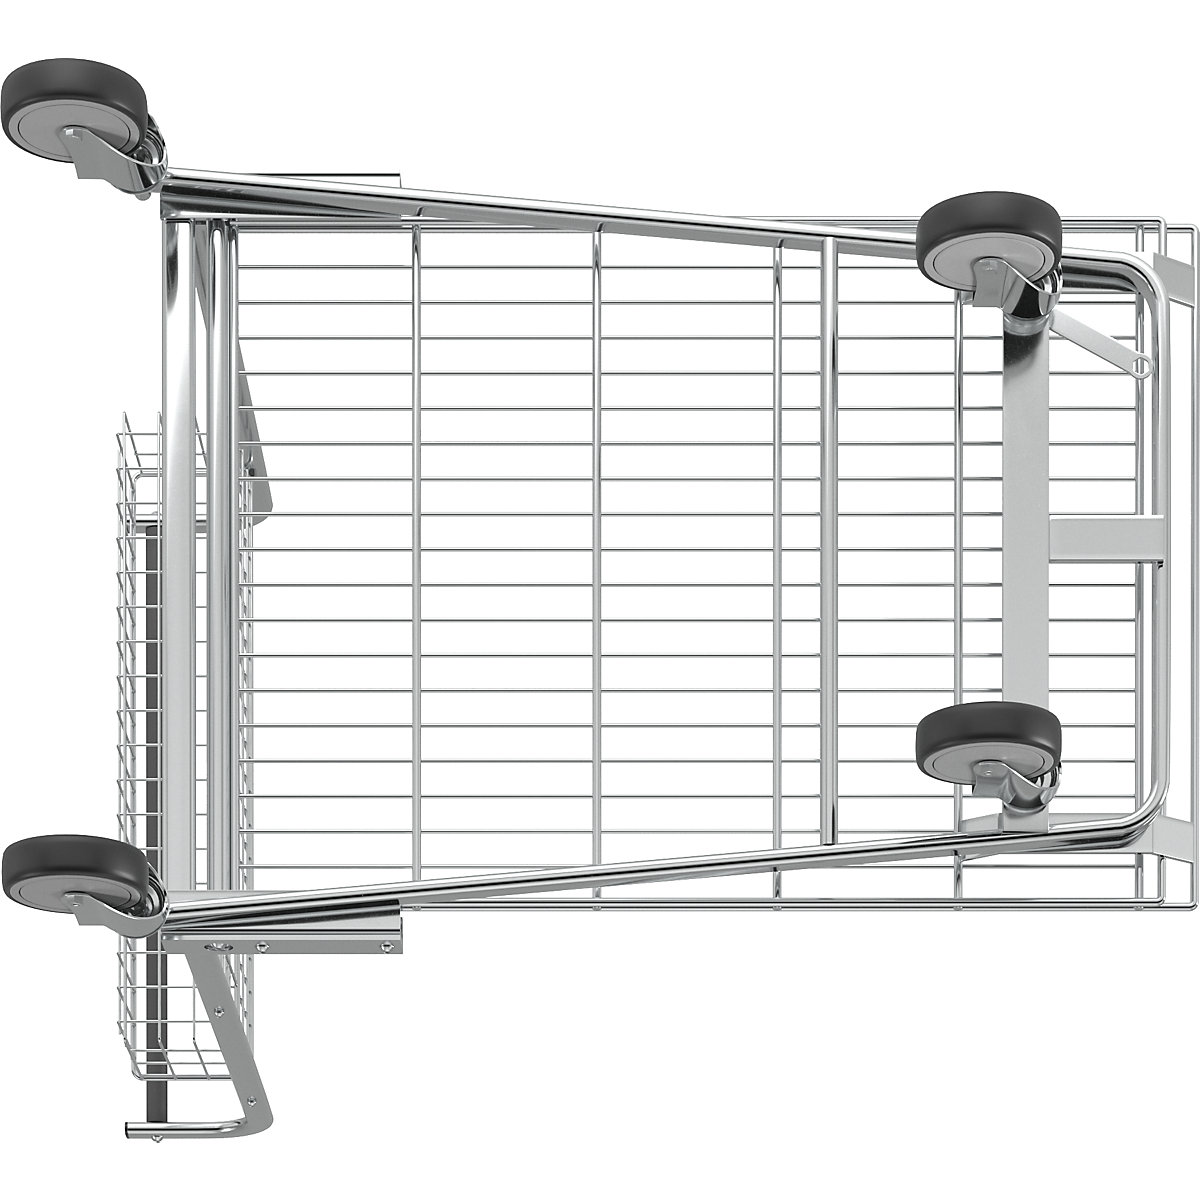 C+C platform trolley – Kongamek (Product illustration 6)-5